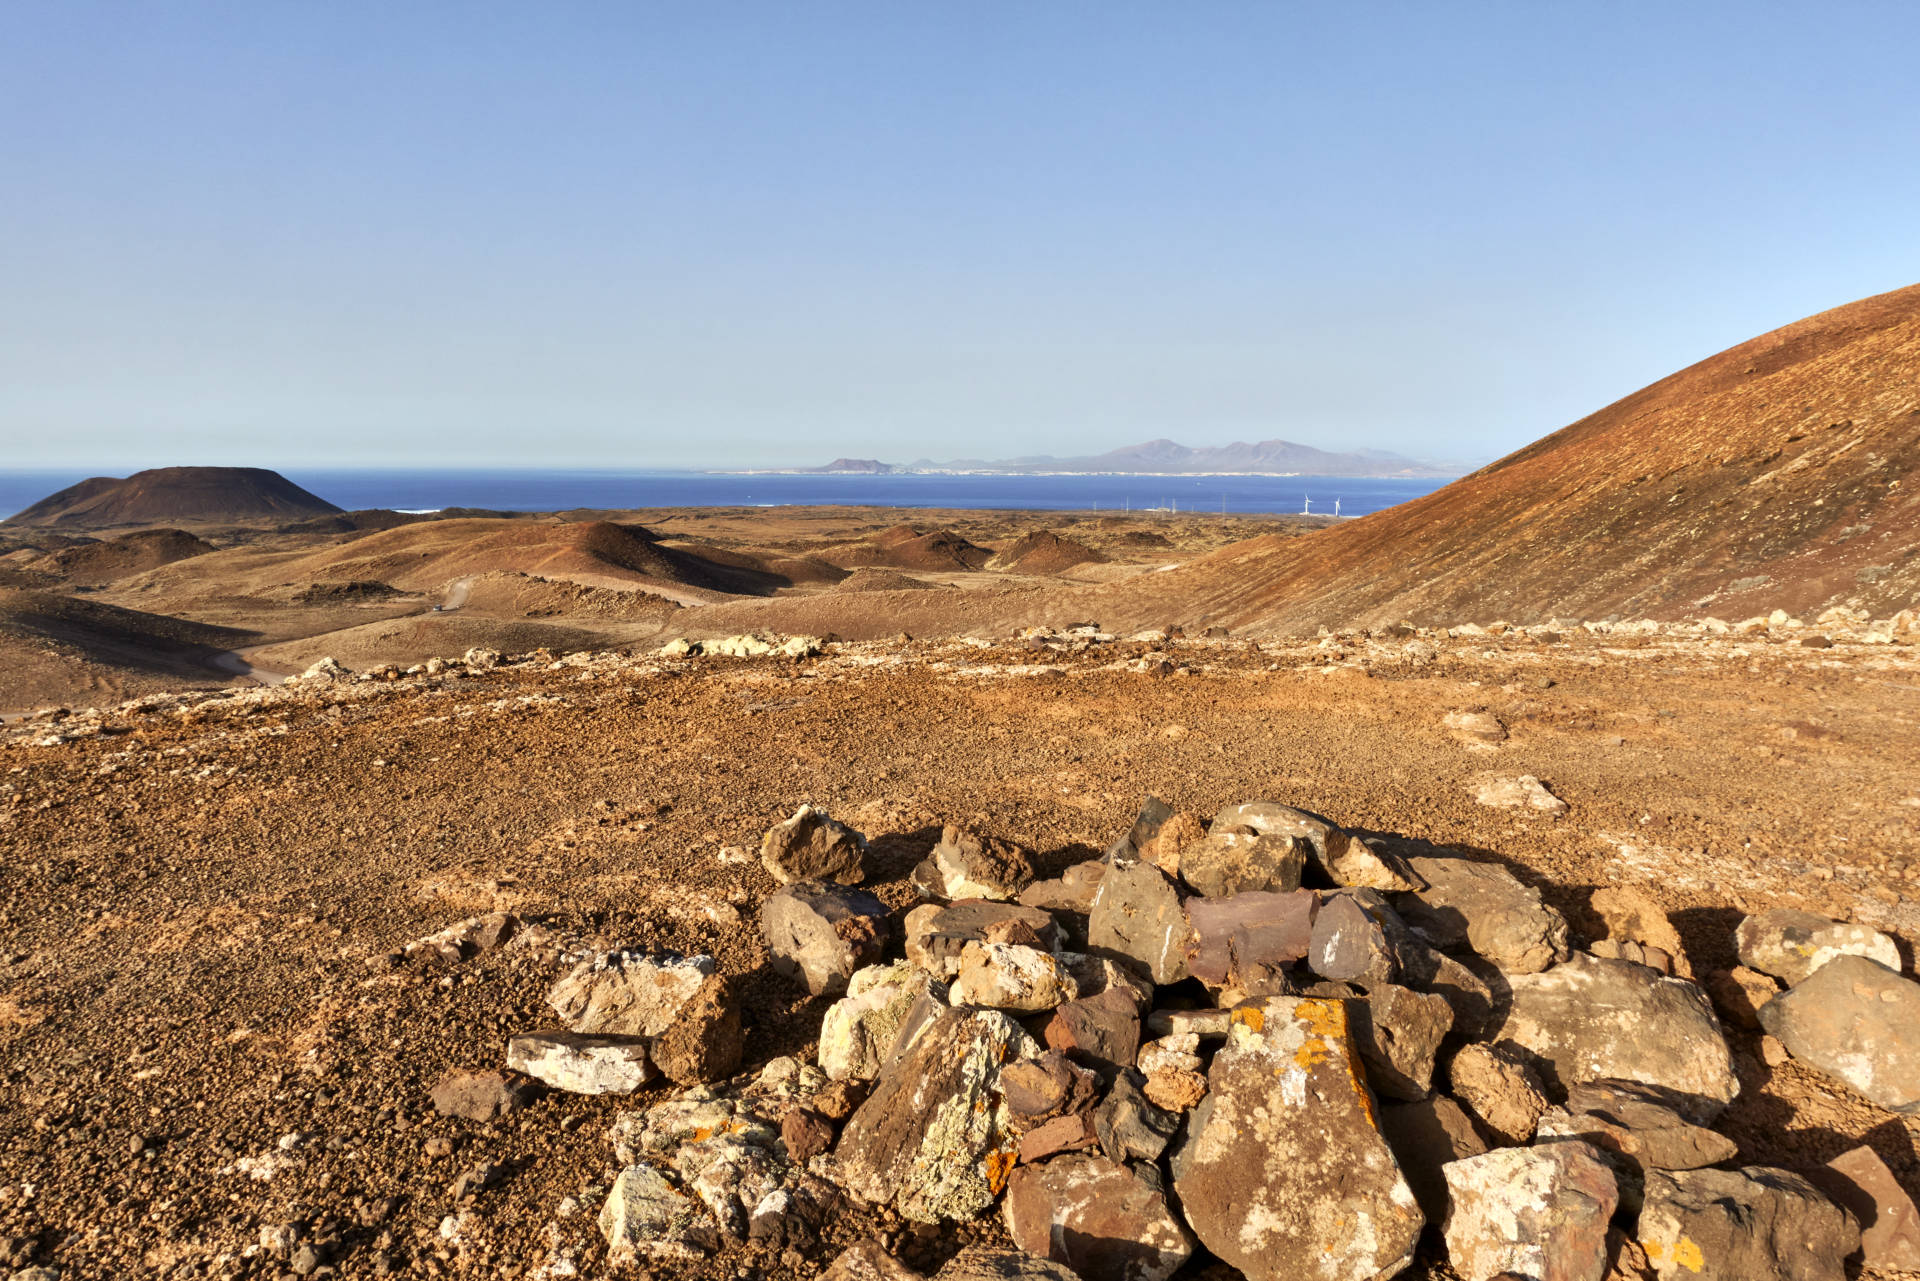 Am Fuss des Gipfelgrates des Montaña de San Rafel Blicke auf die Lavablasen Morros Tamboriles und Lanzarote.